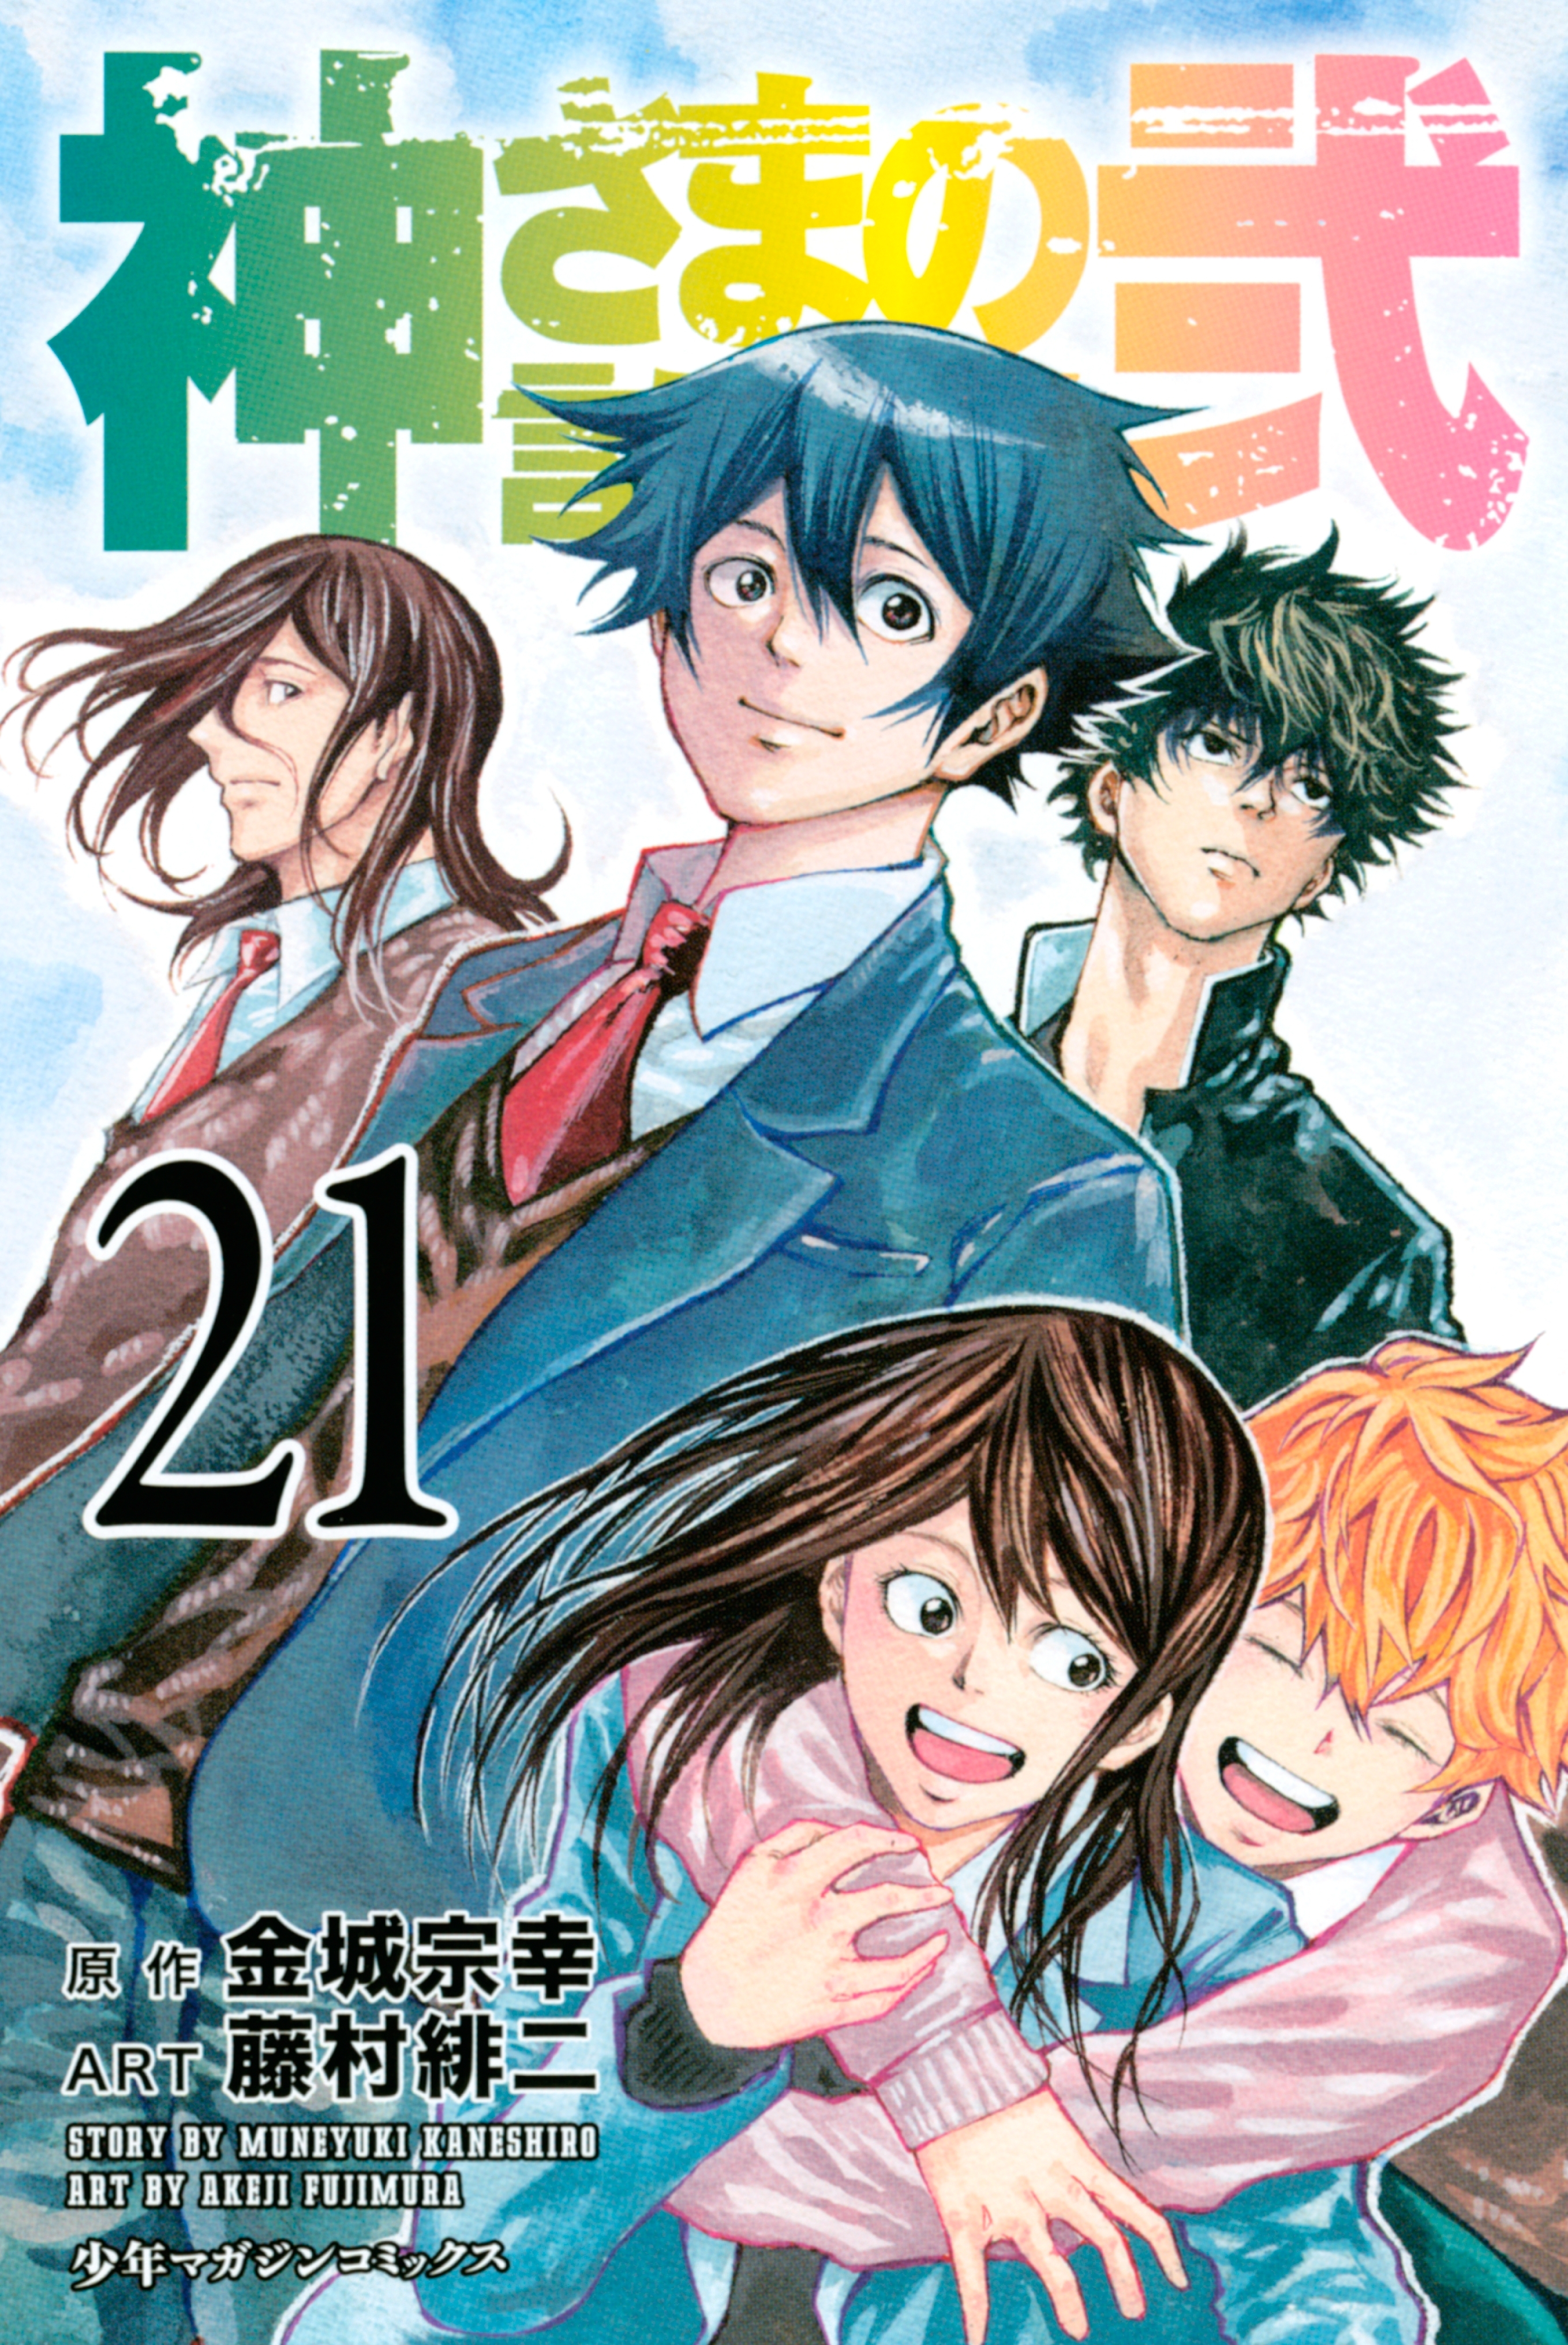 Kamisama no Iutoori 2 Vol.1-21 Complete Full Set Japanese Manga Comics